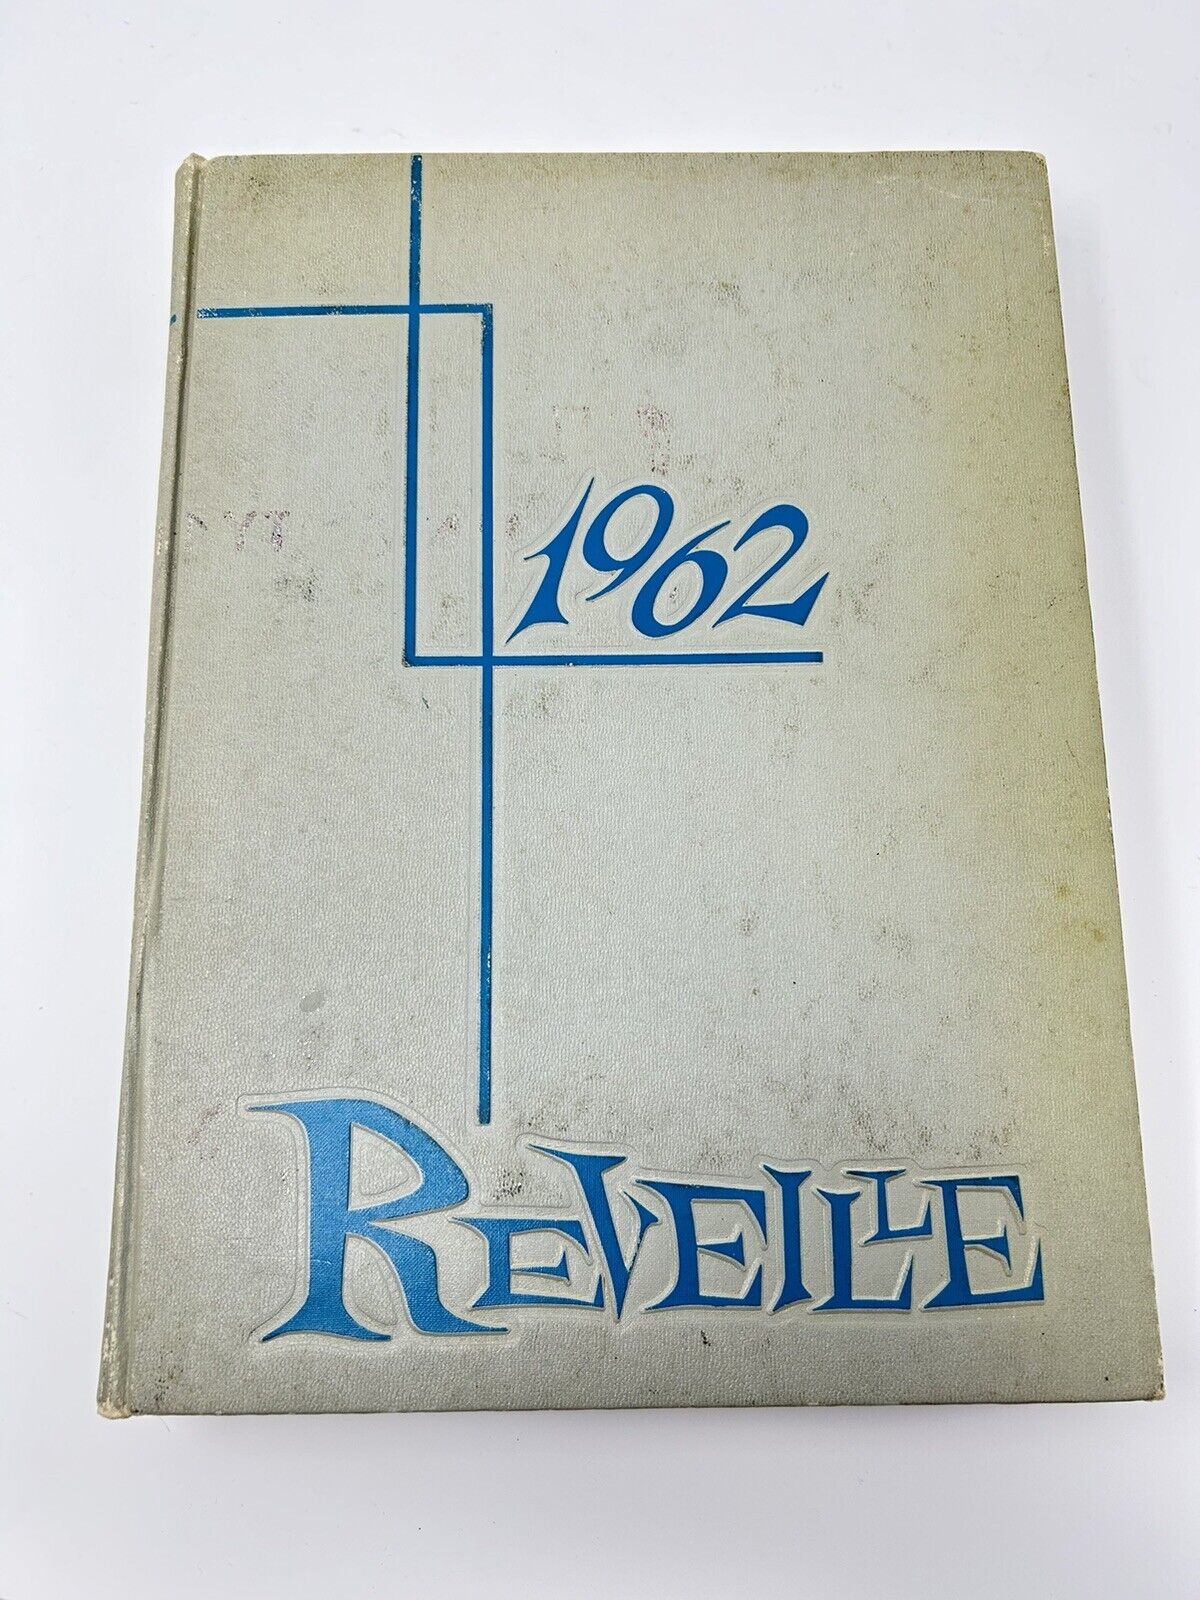 1962 Reveille Yearbook,Arlington State College,Texas